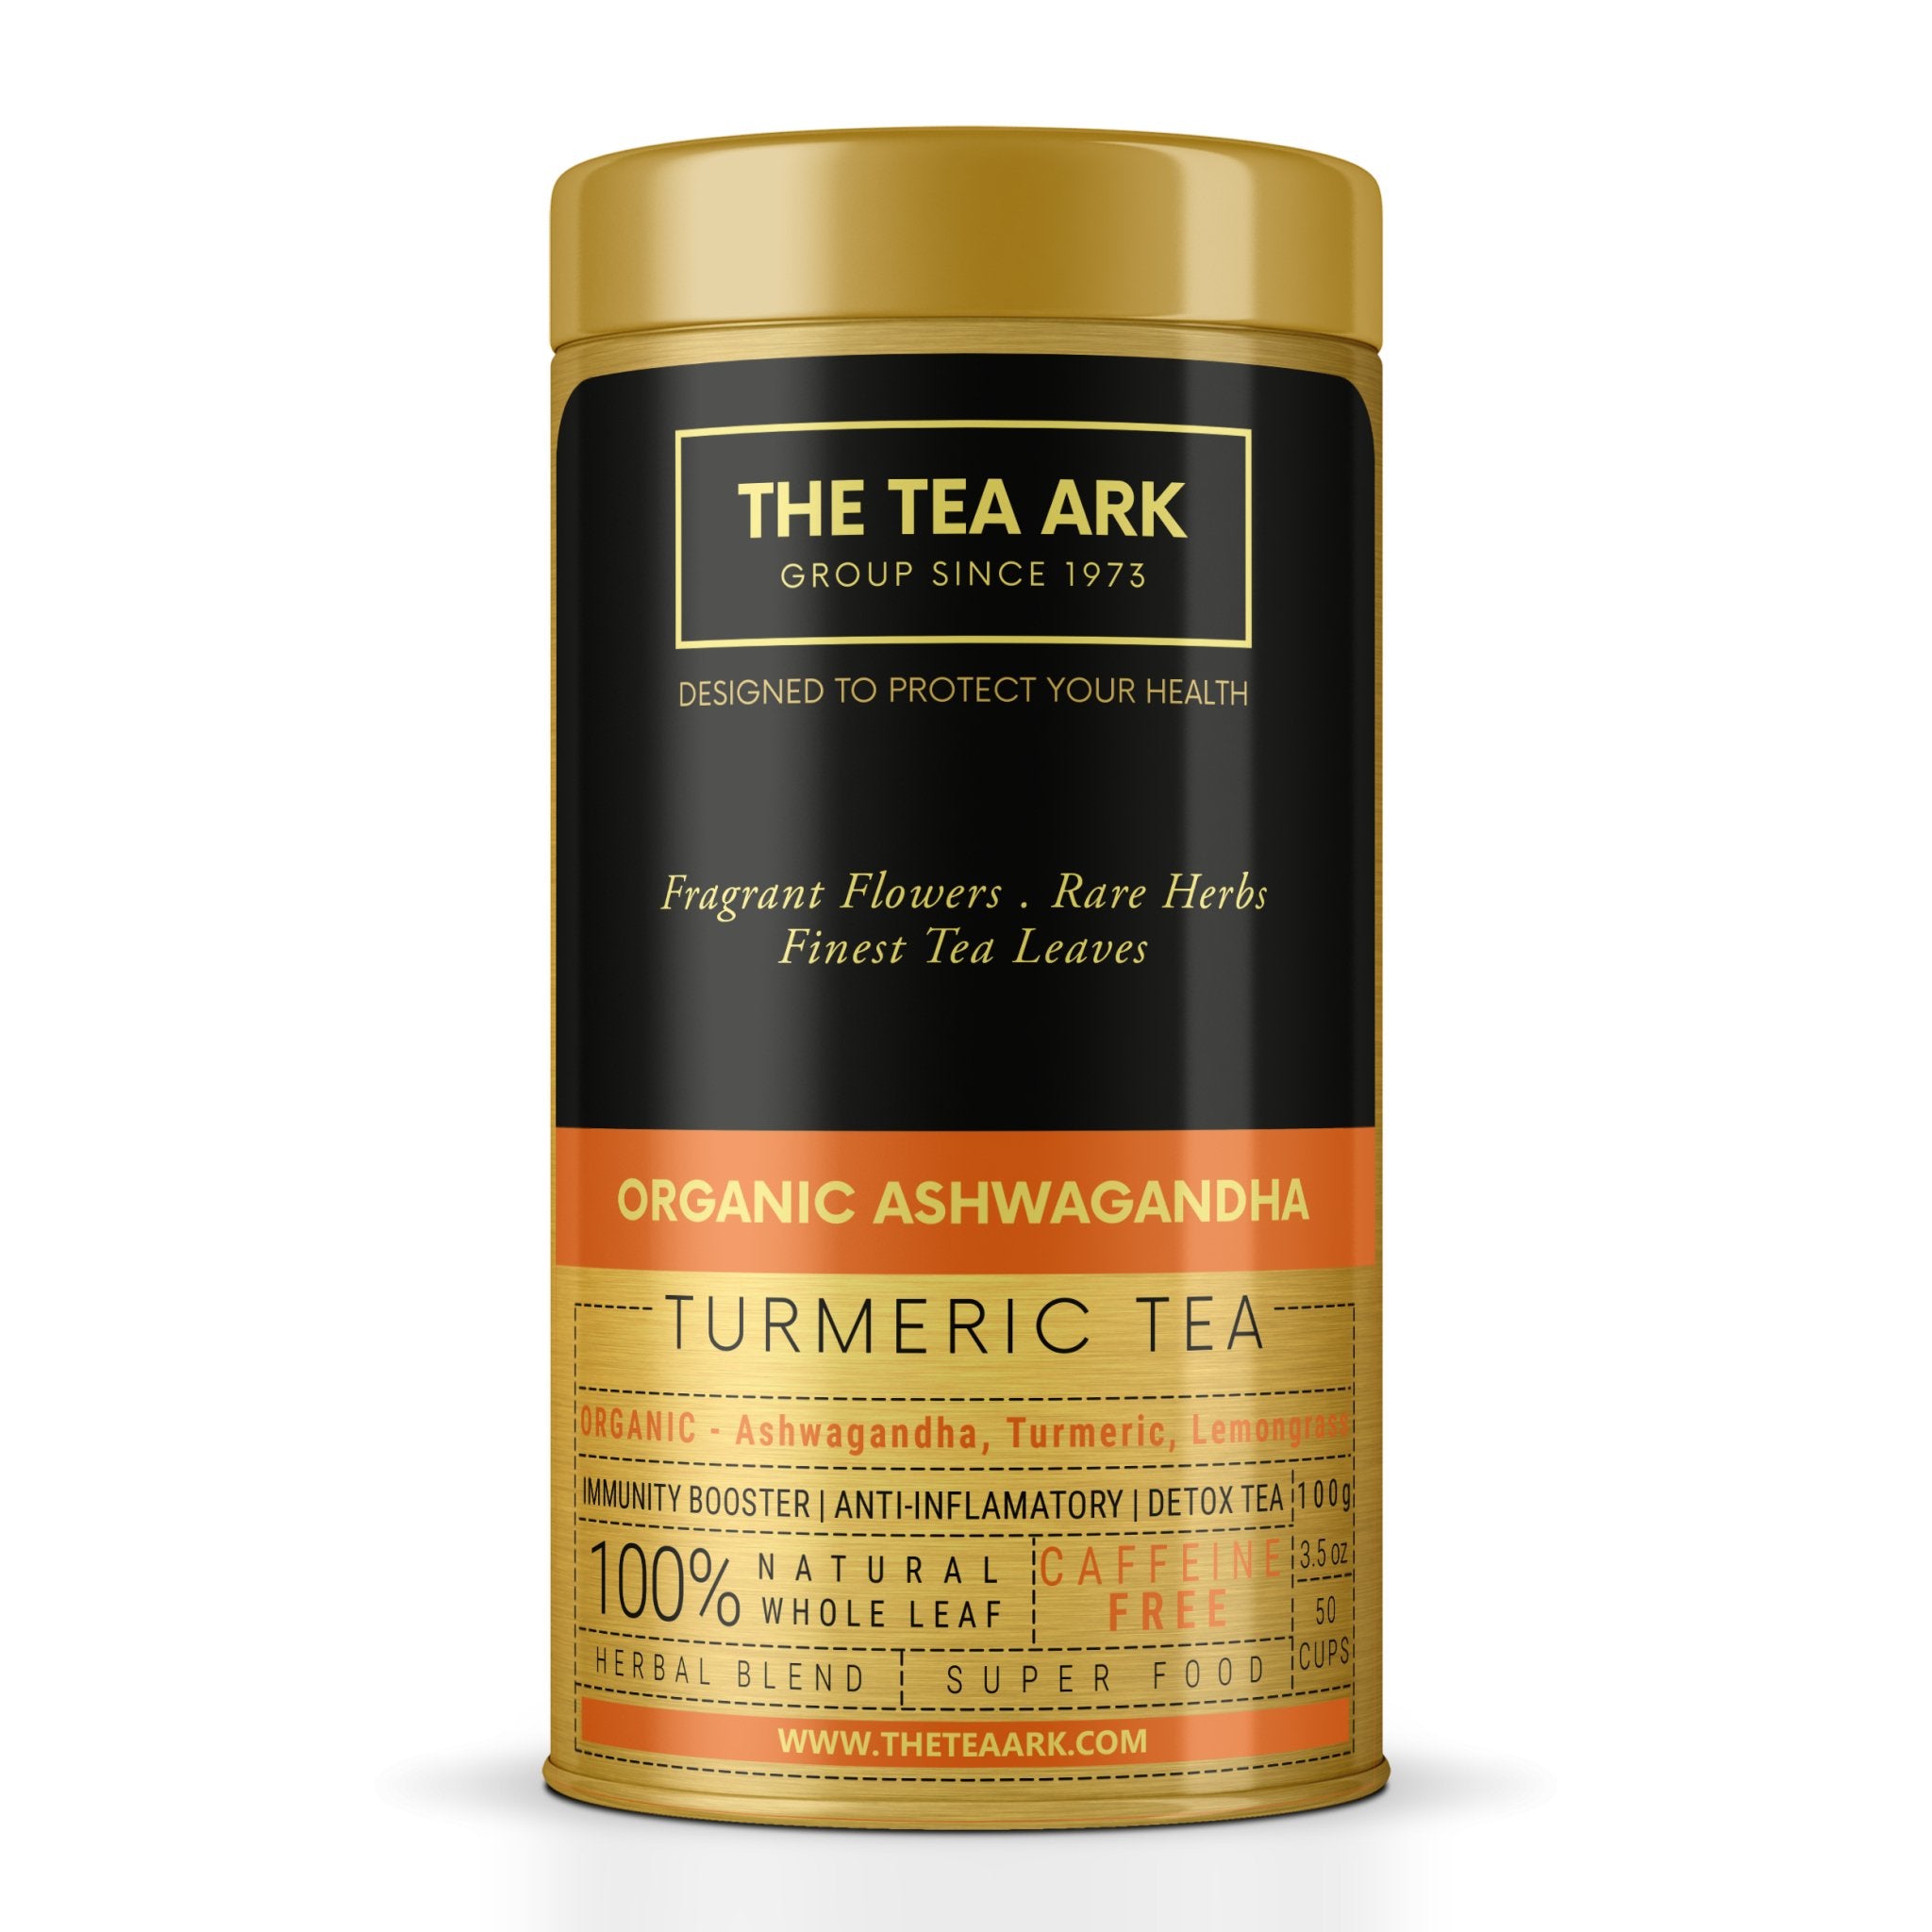 The Tea Ark Ashwagandha, Turmeric Tea, Immunity Booster, Body Detox - Inlife Pharma Private Limited